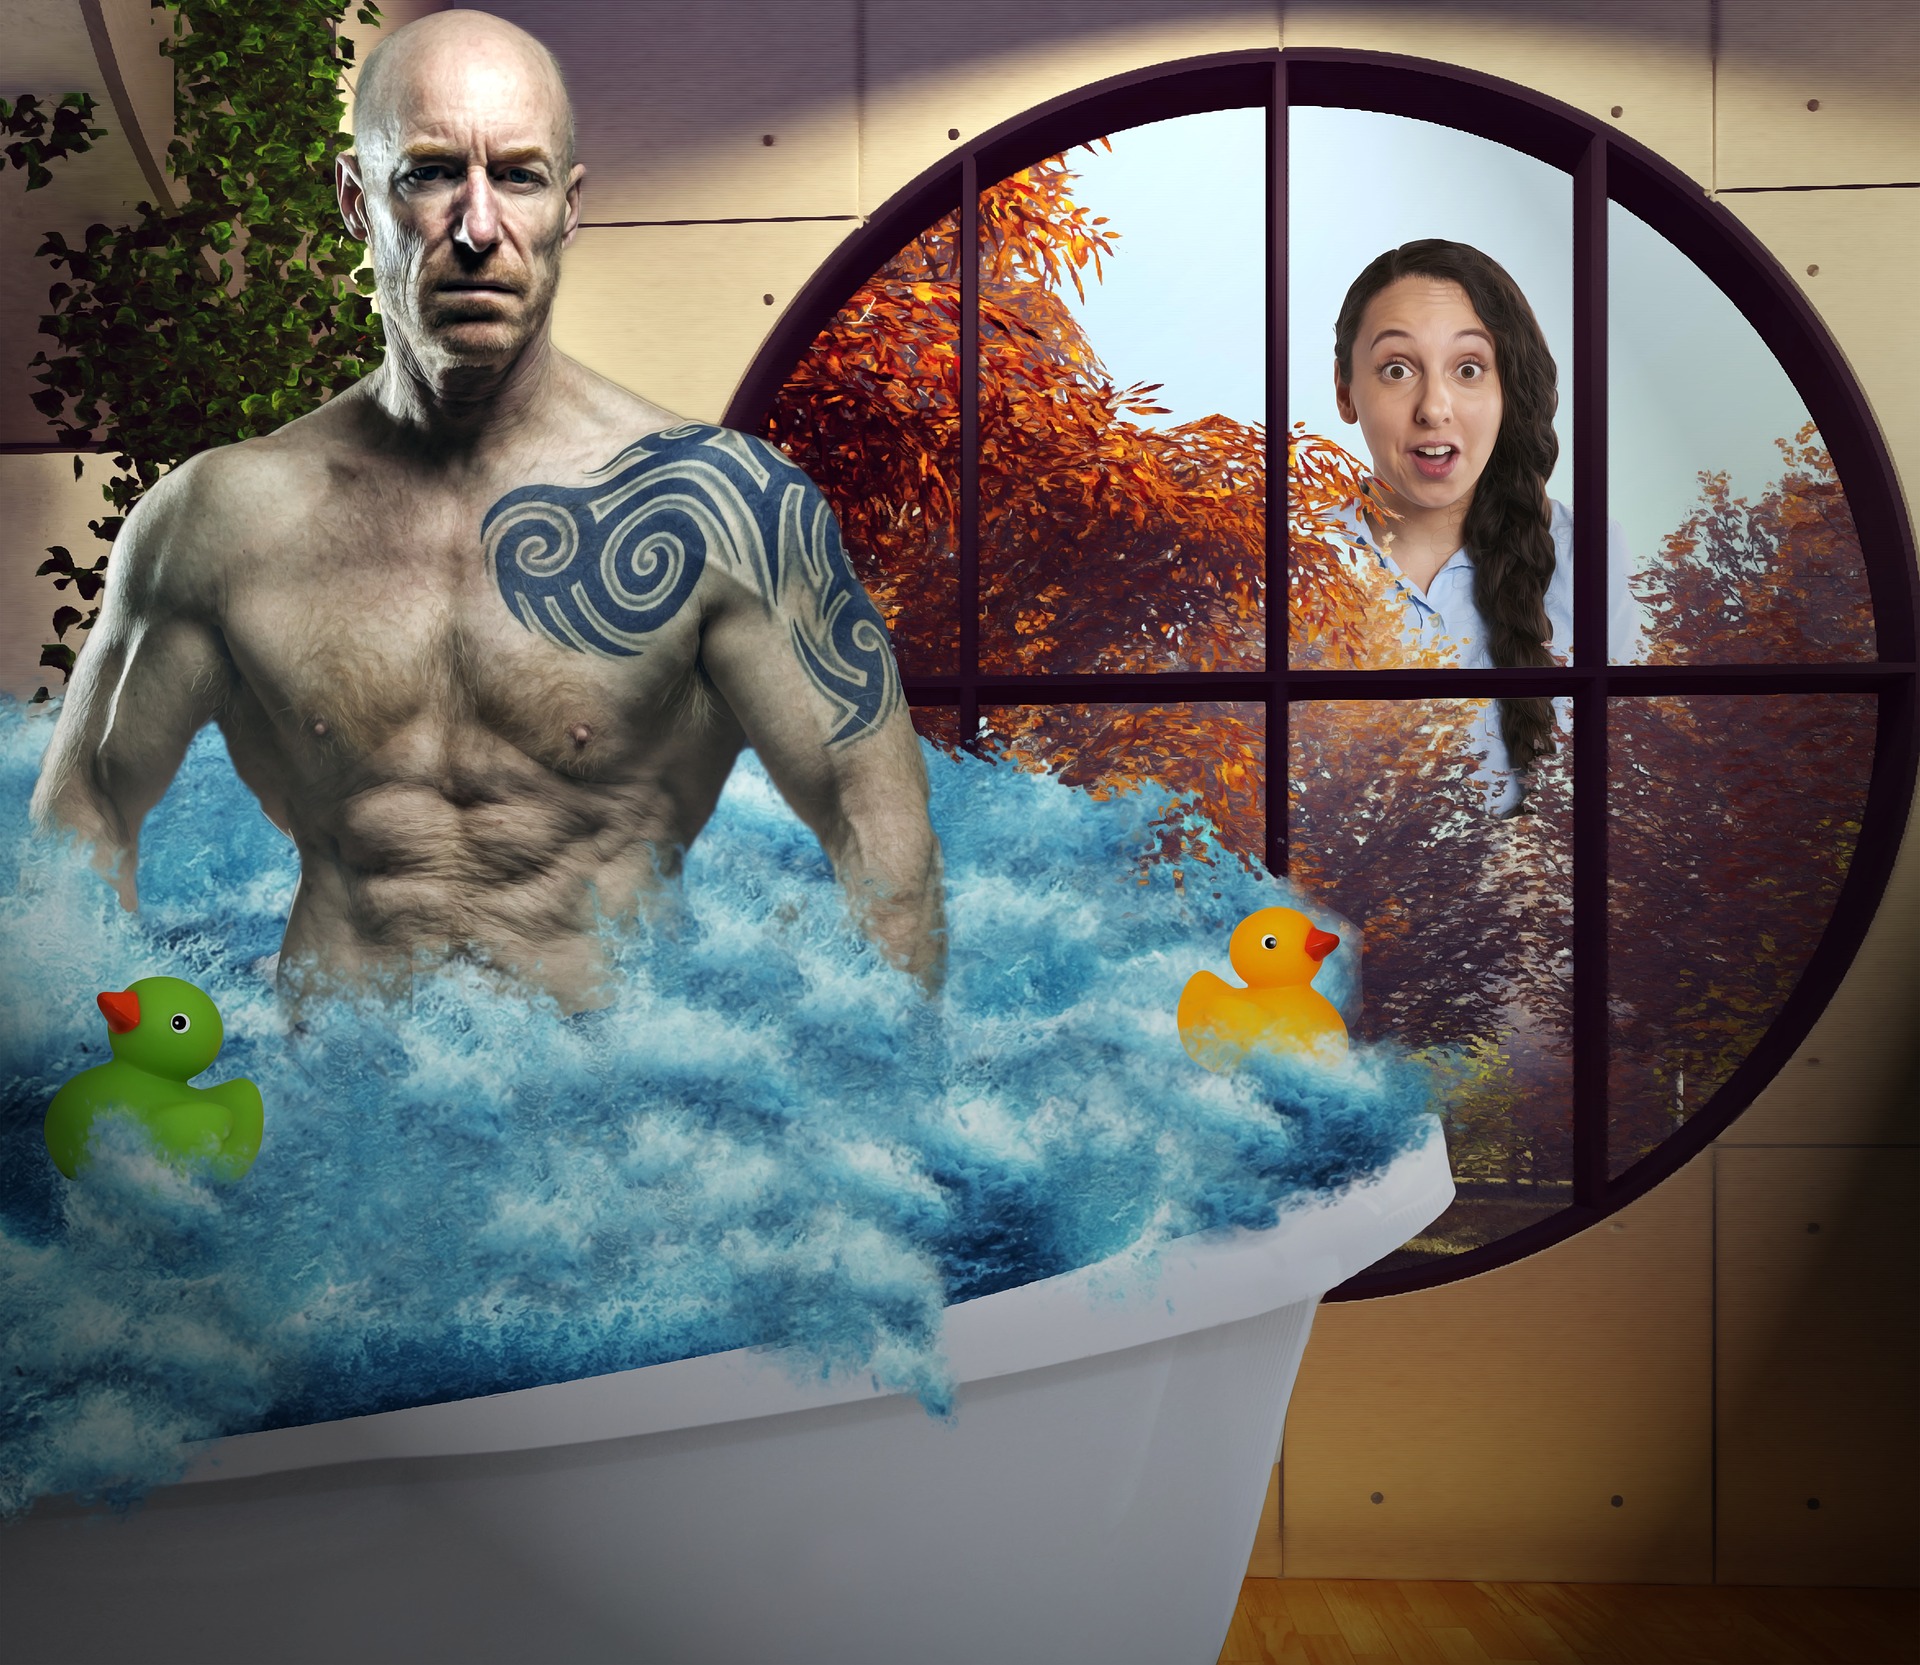 Muscular man in bathtub and woman peeking